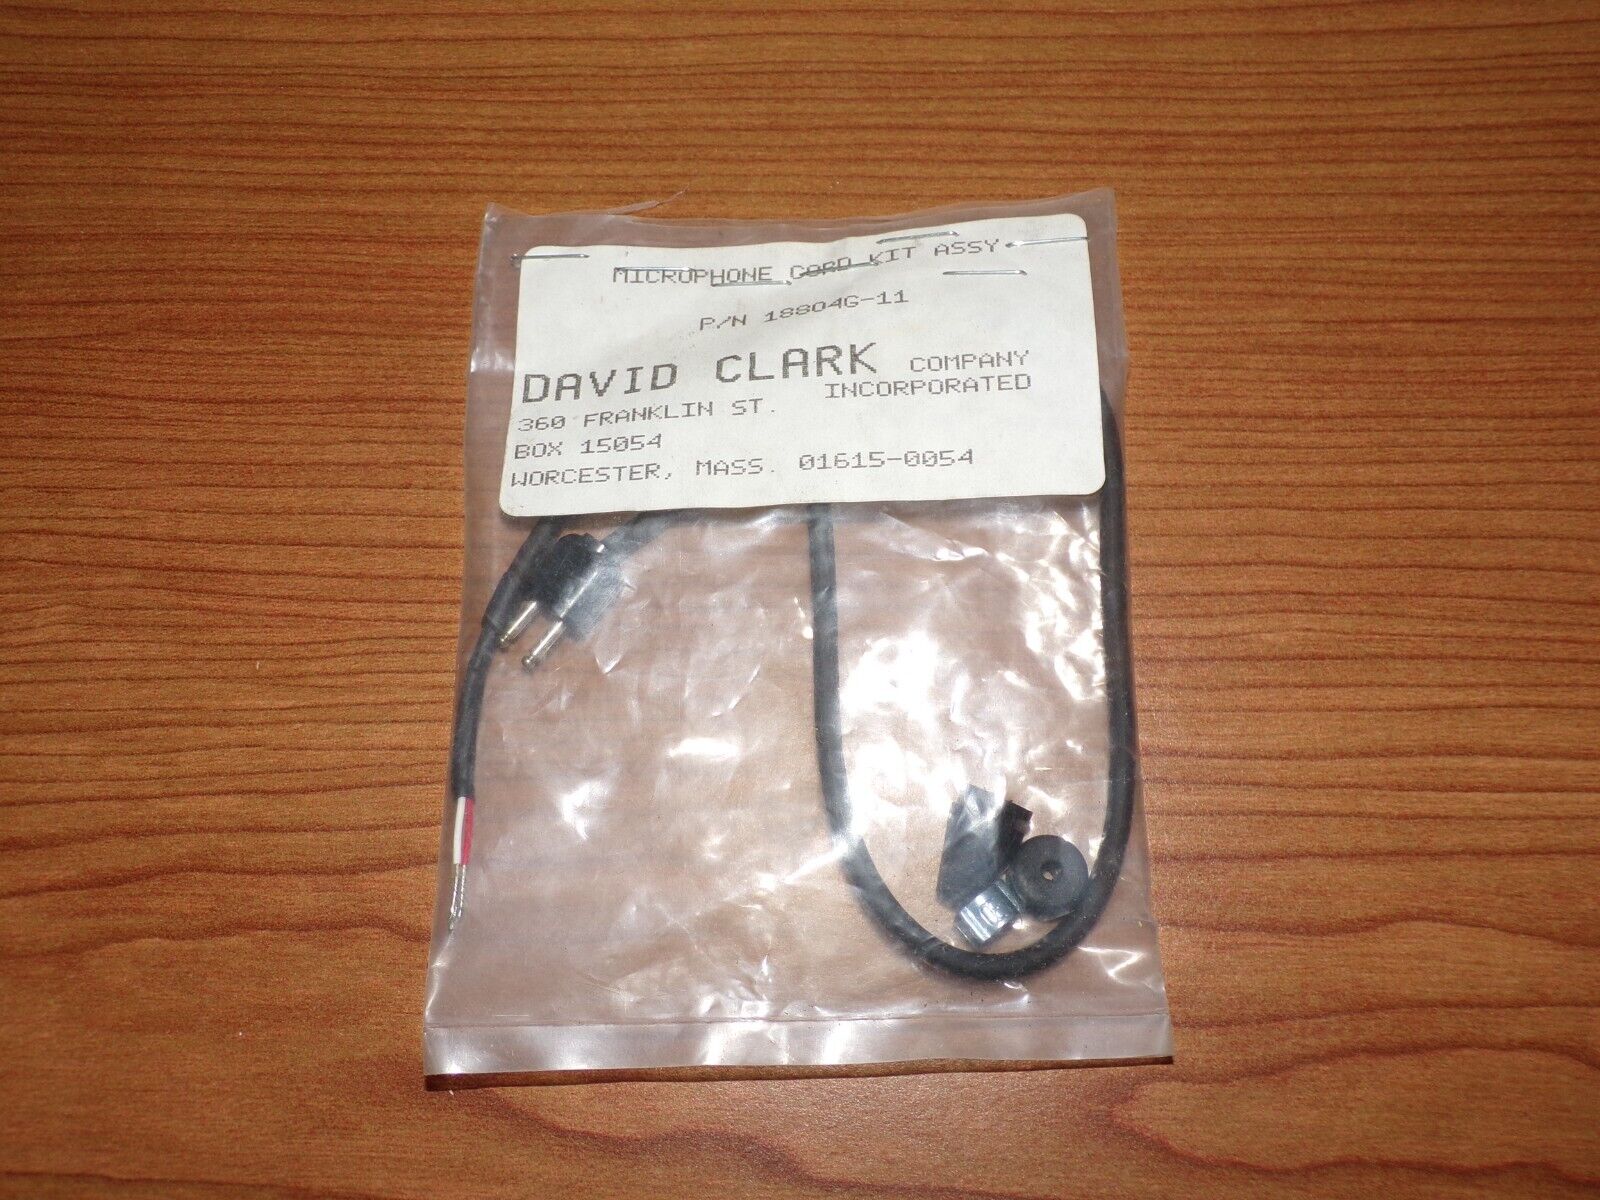 David Clark 18804G-11 Microphone Plug Cord Kit